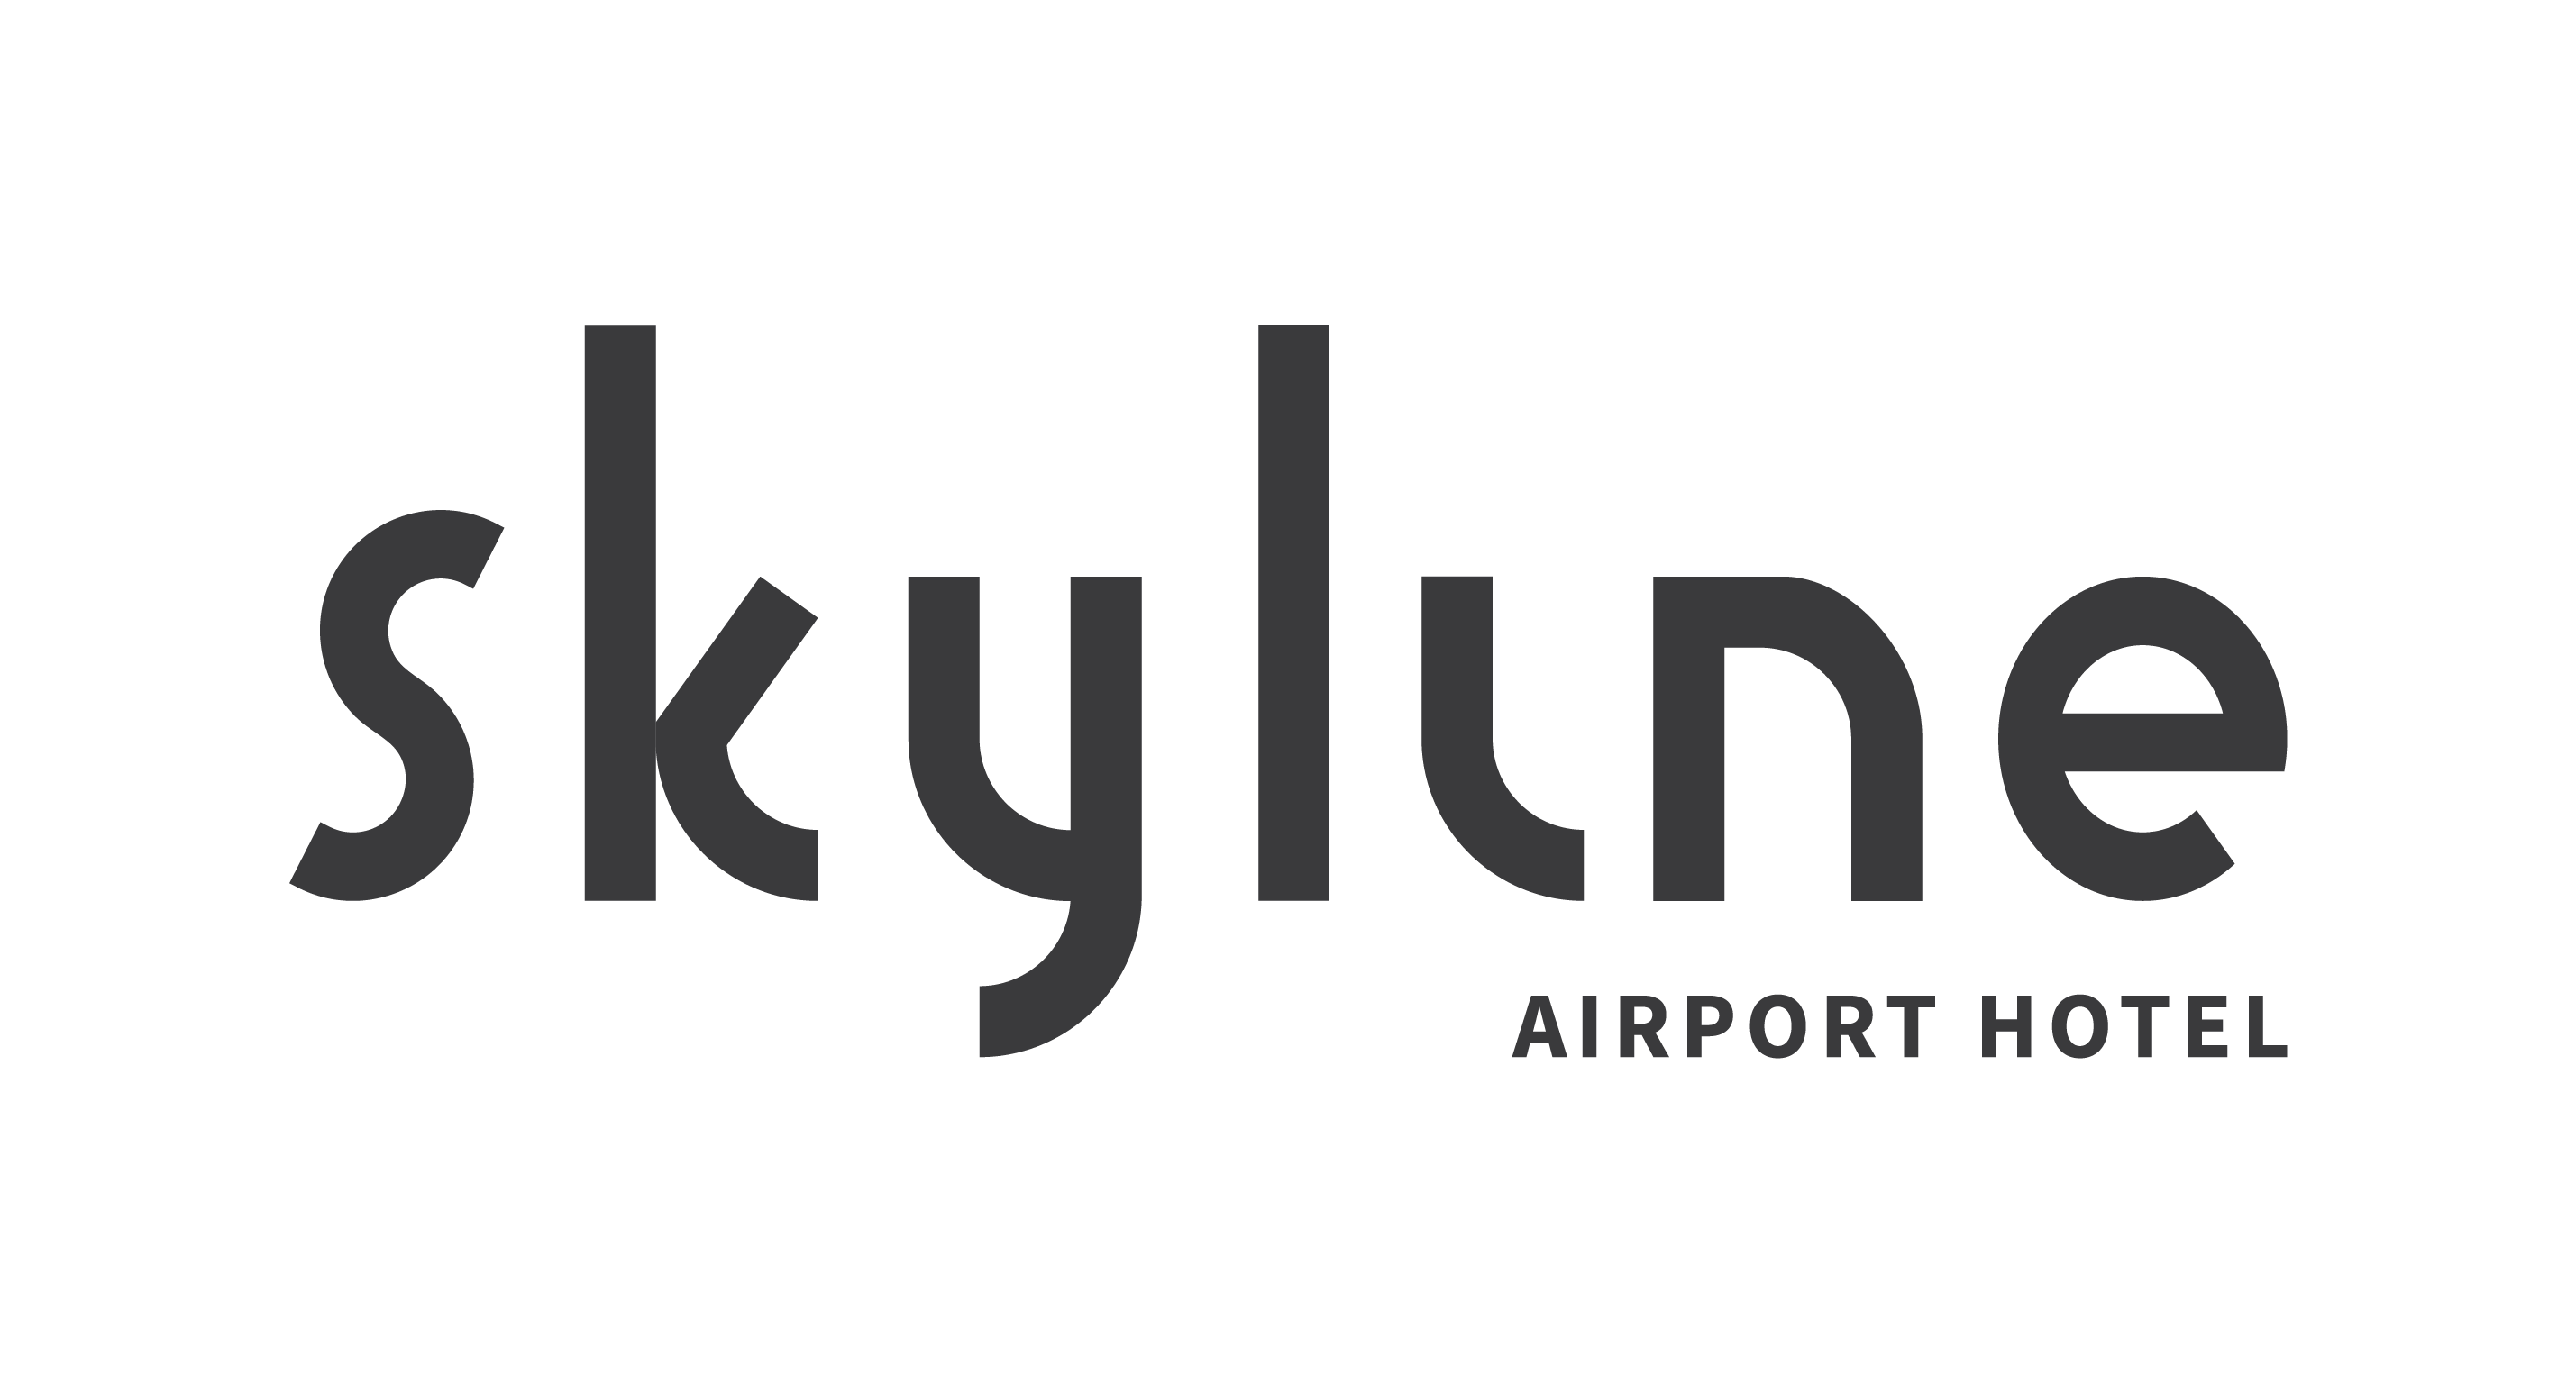 airport hotel skyline logo